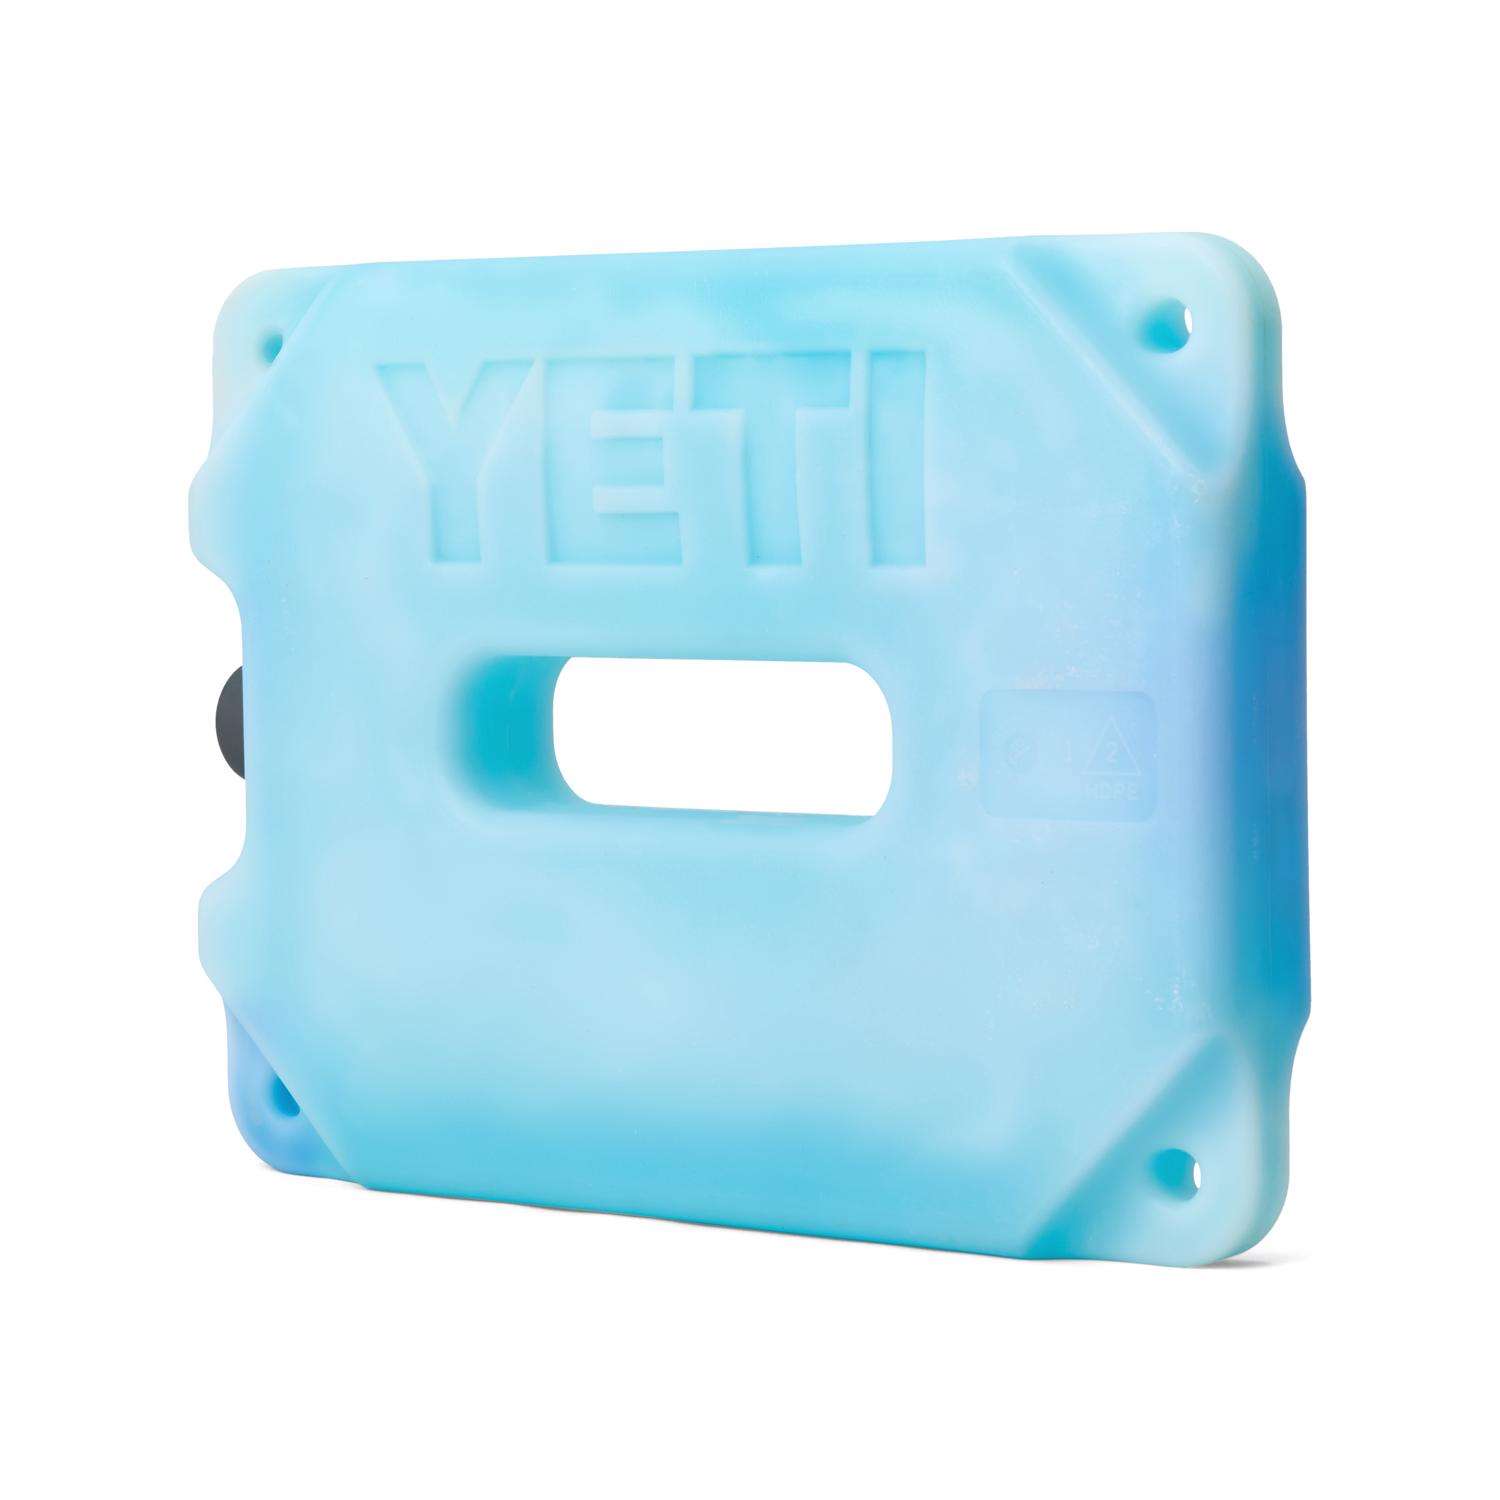 Yeti Cooler Ice Pack, 1-Pound